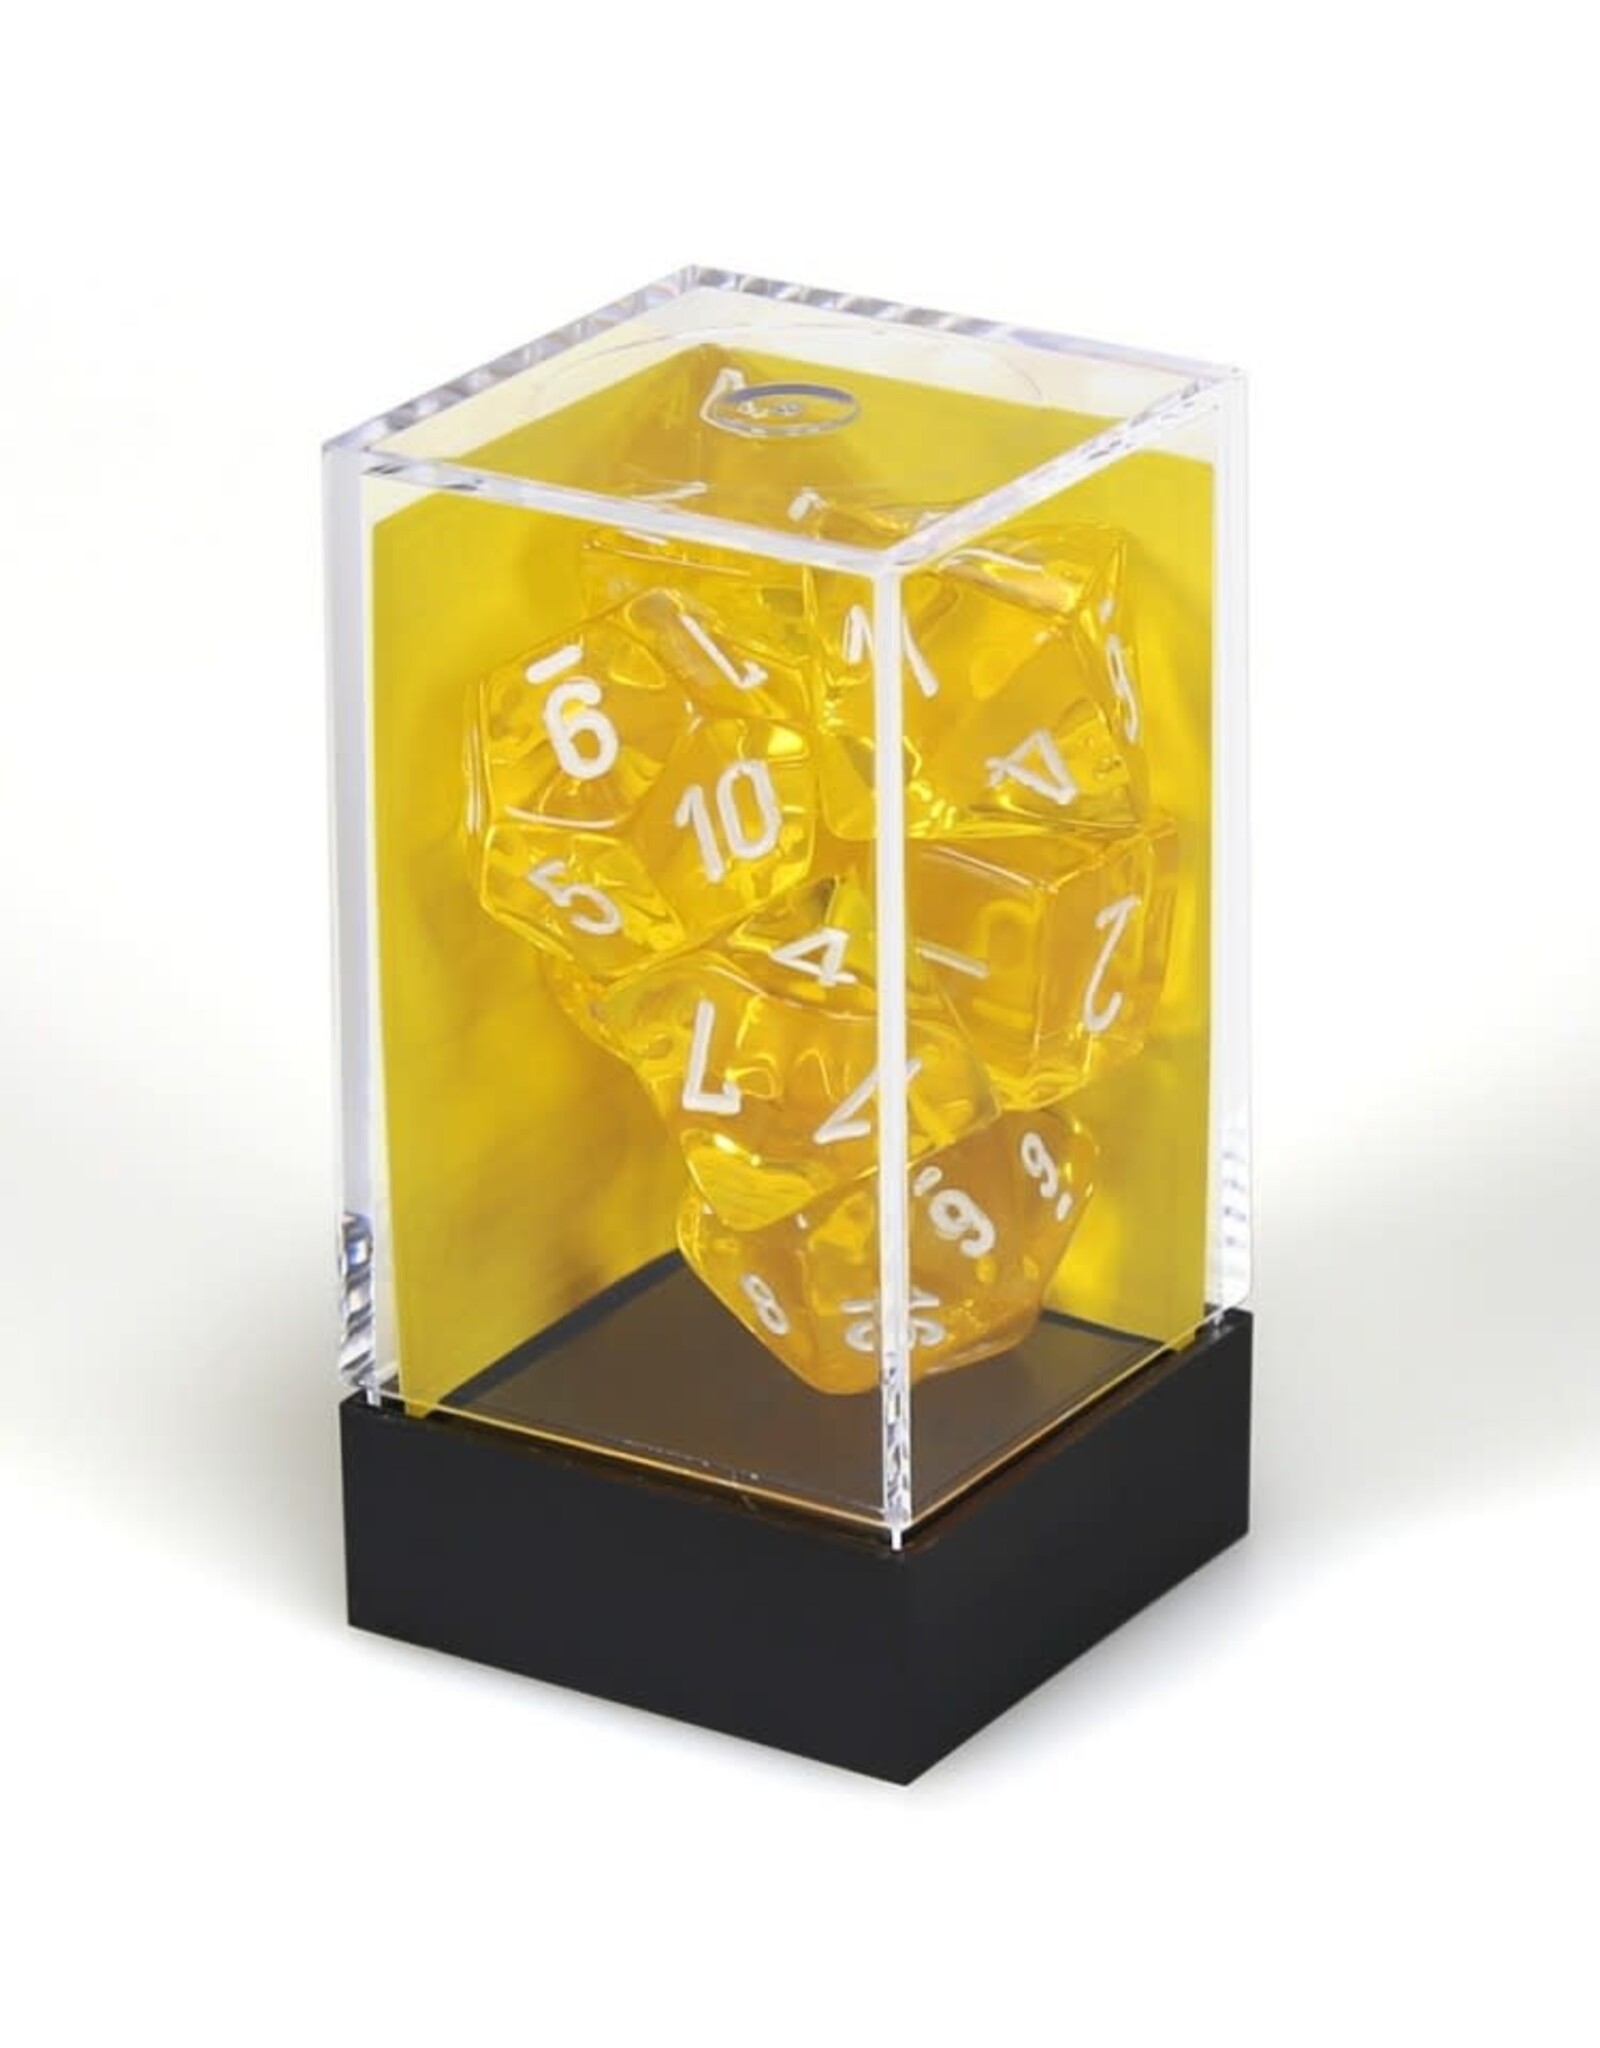 Chessex Yellow w/white Translucent Poly 7 dice set